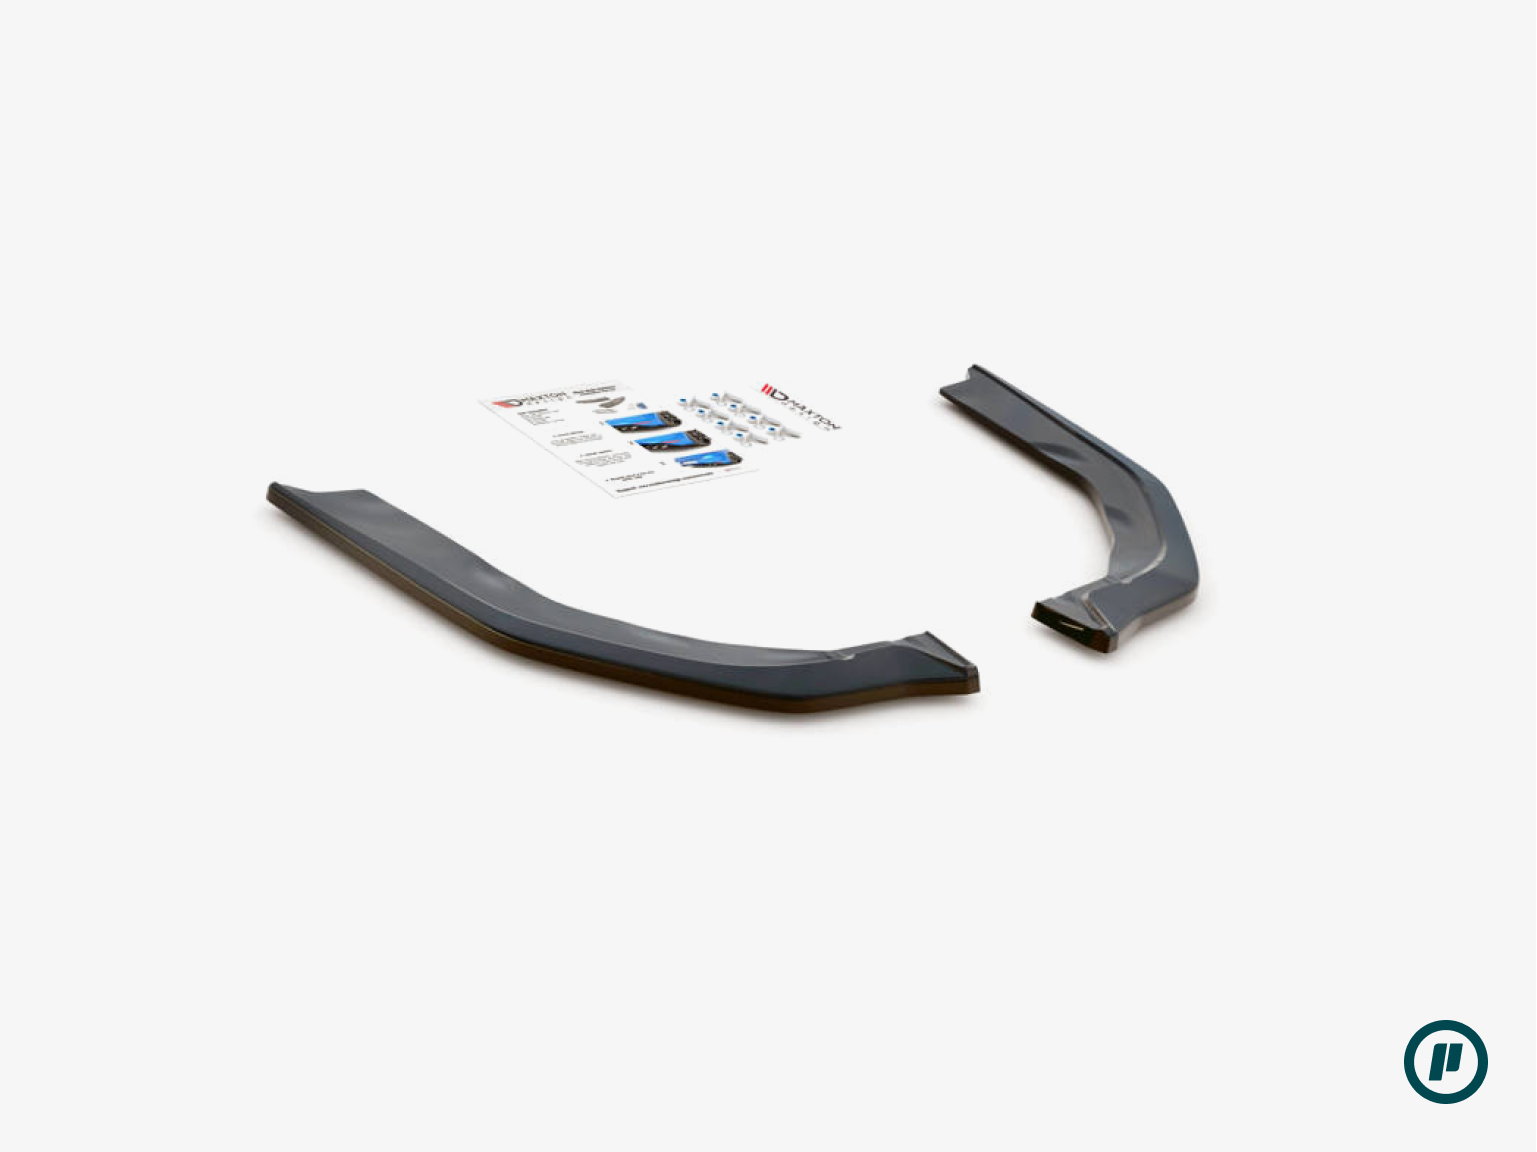 Maxton Design - Rear Side Splitters v2 for BMW M3 (G80 2021+)